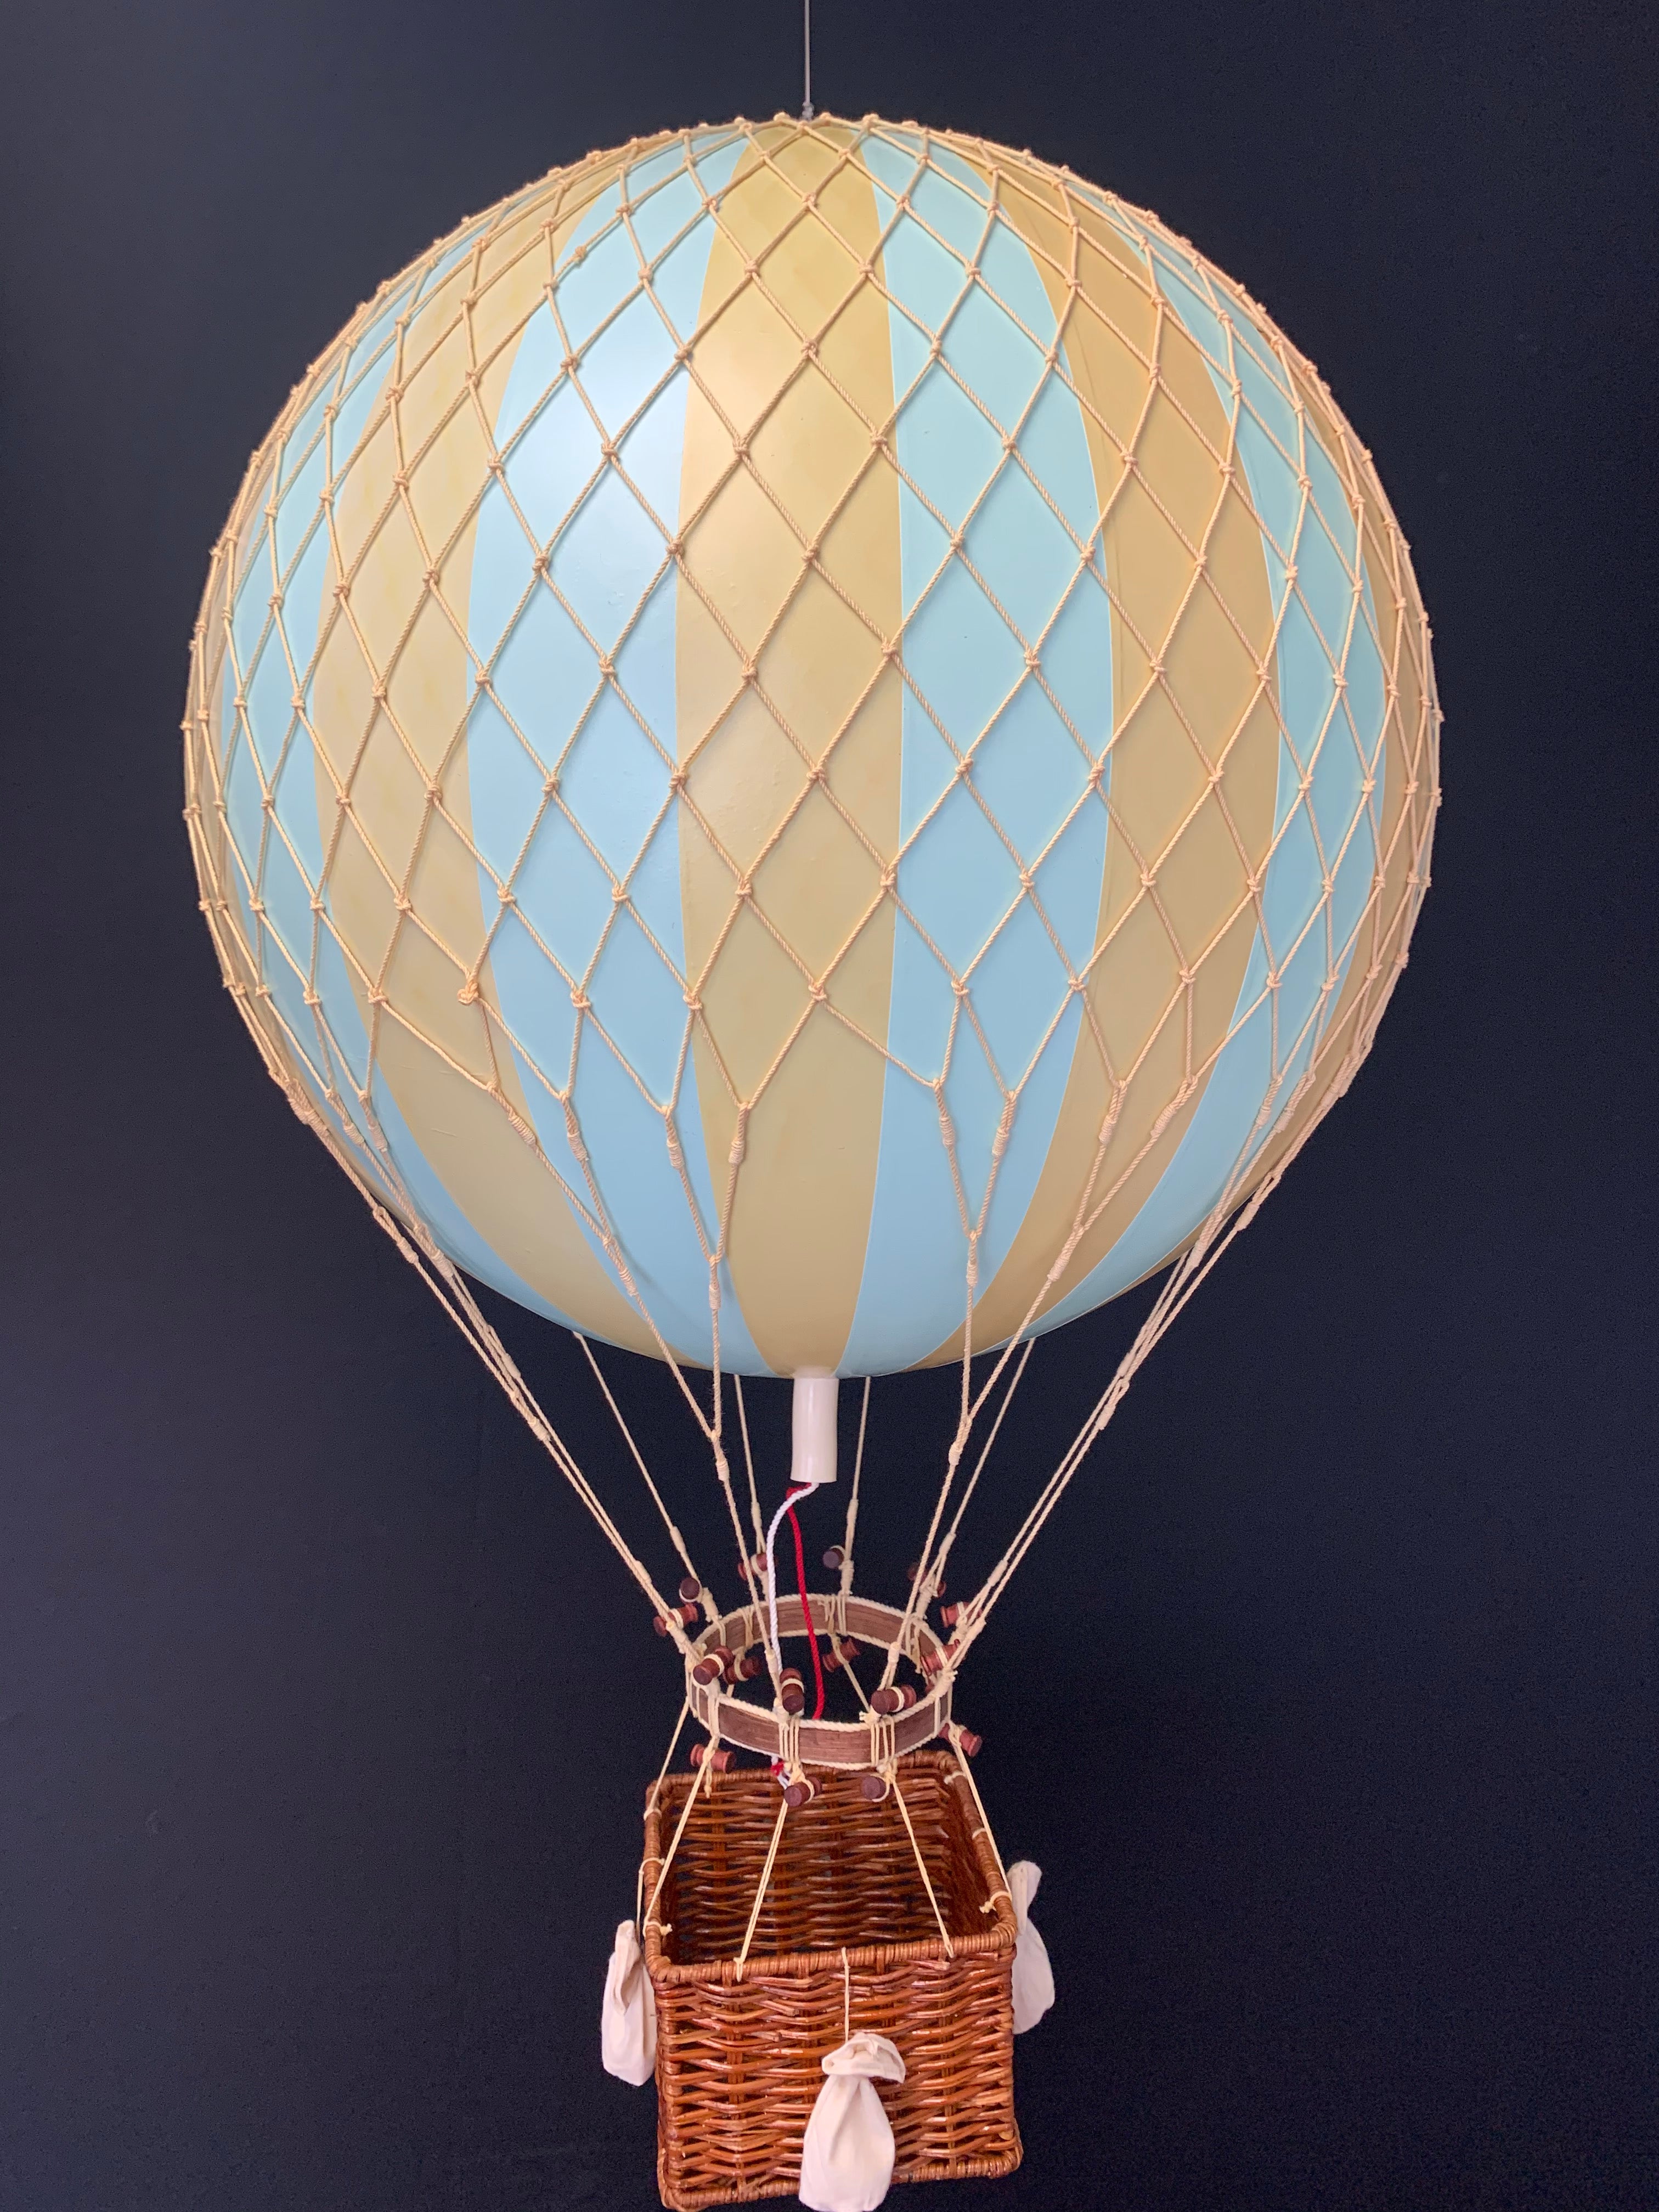 Large hot air Balloon